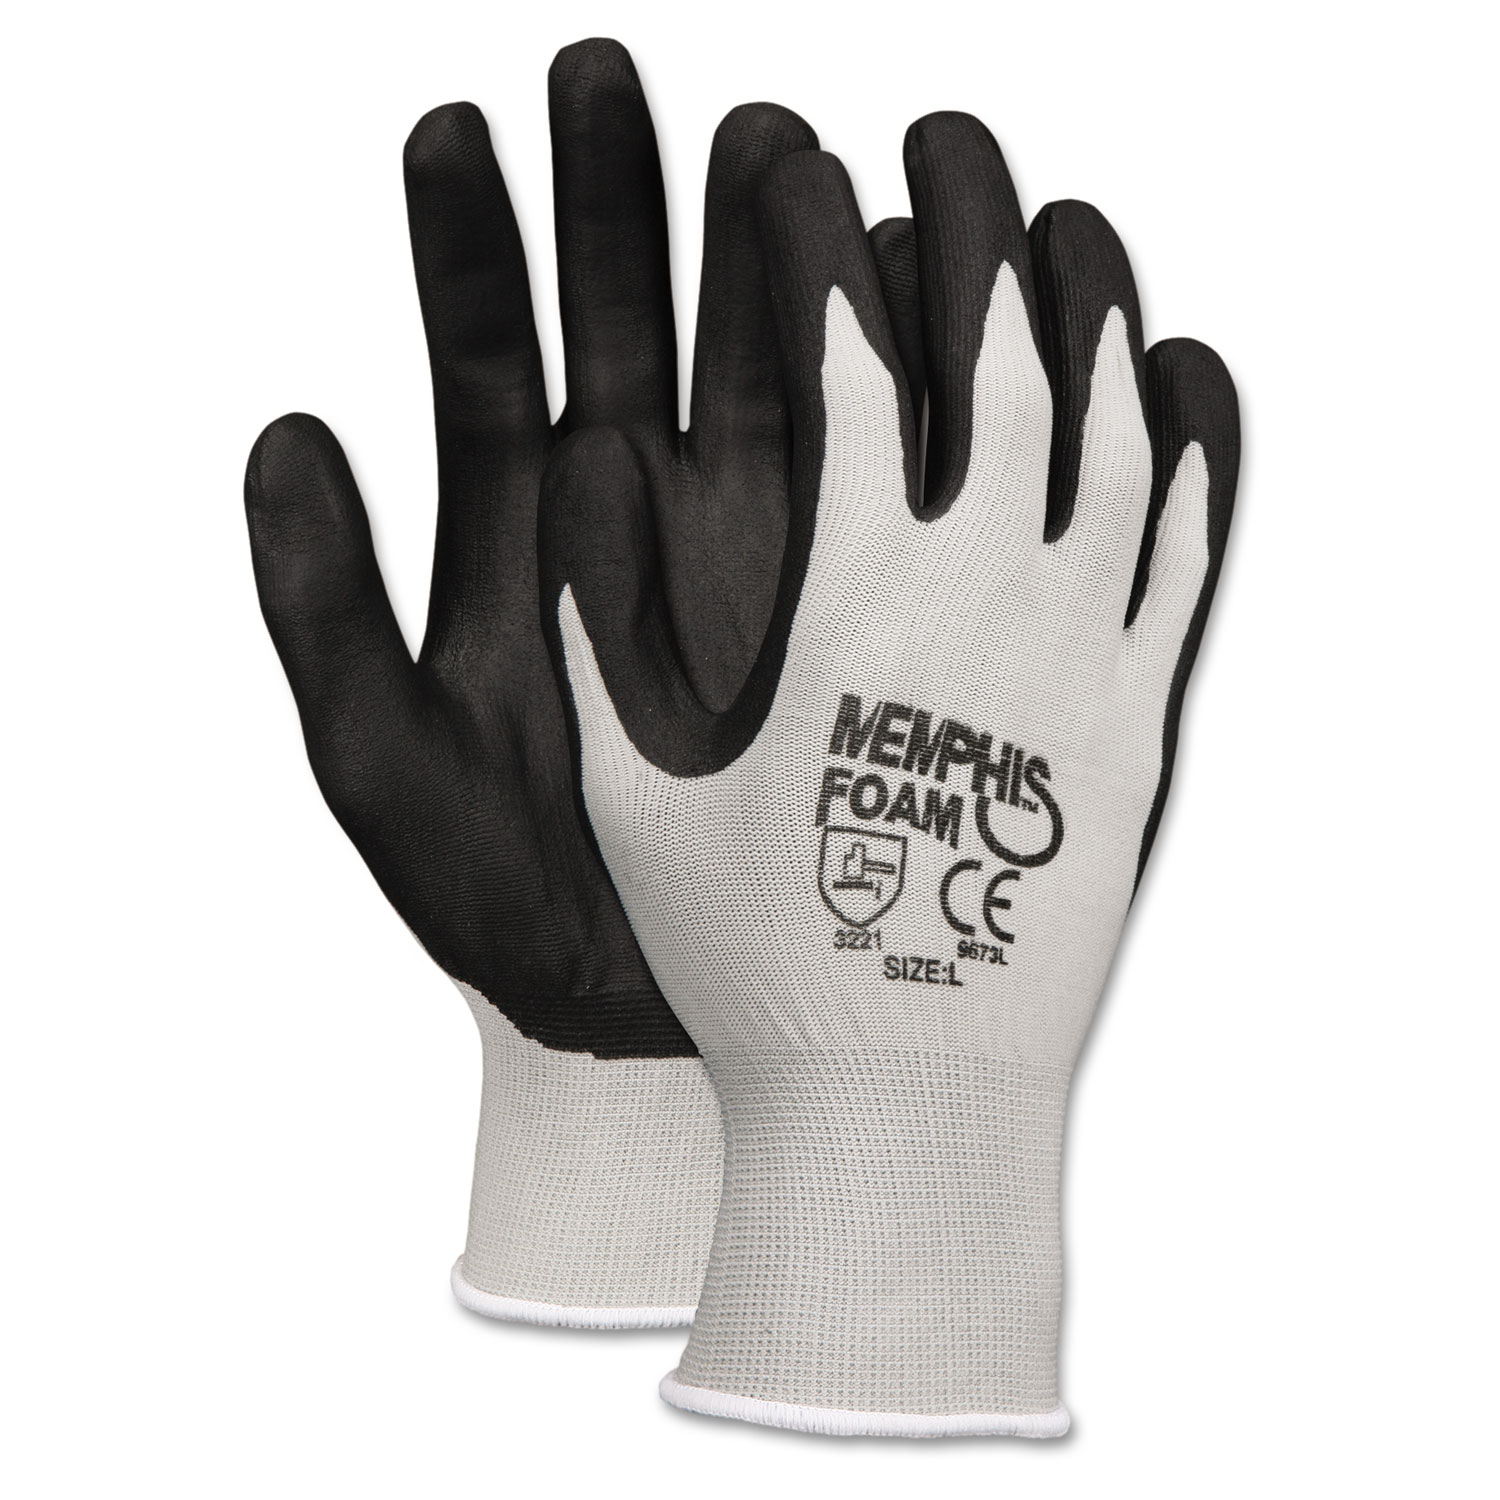  MCR Safety 9673S Economy Foam Nitrile Gloves, Small, Gray/Black, 12 Pairs (CRW9673S) 